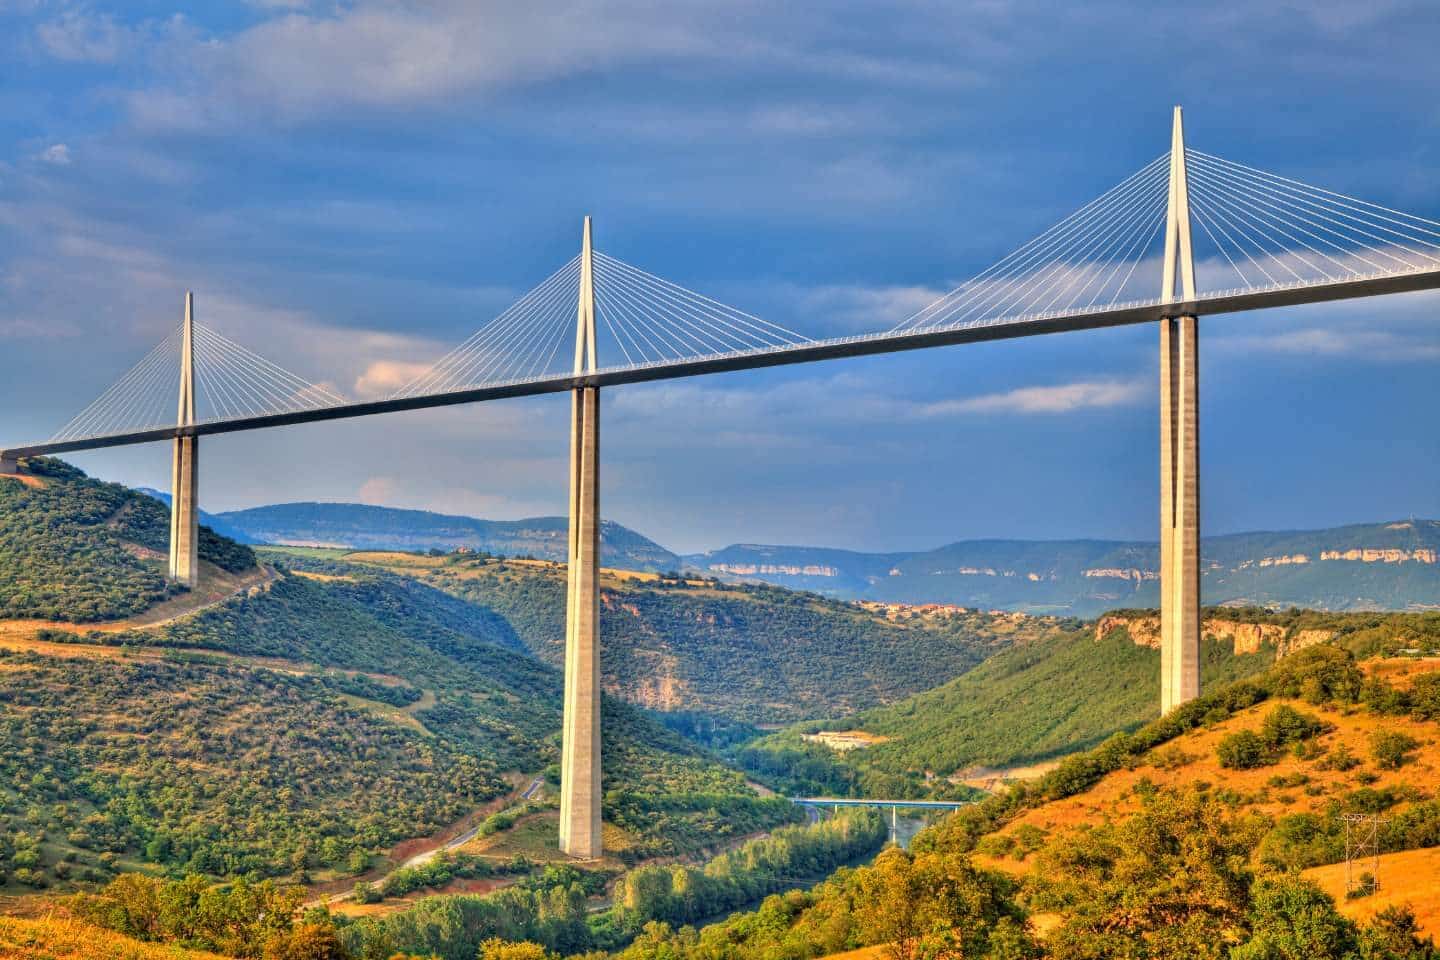 Tallest bridge of Millau Viaduct in France